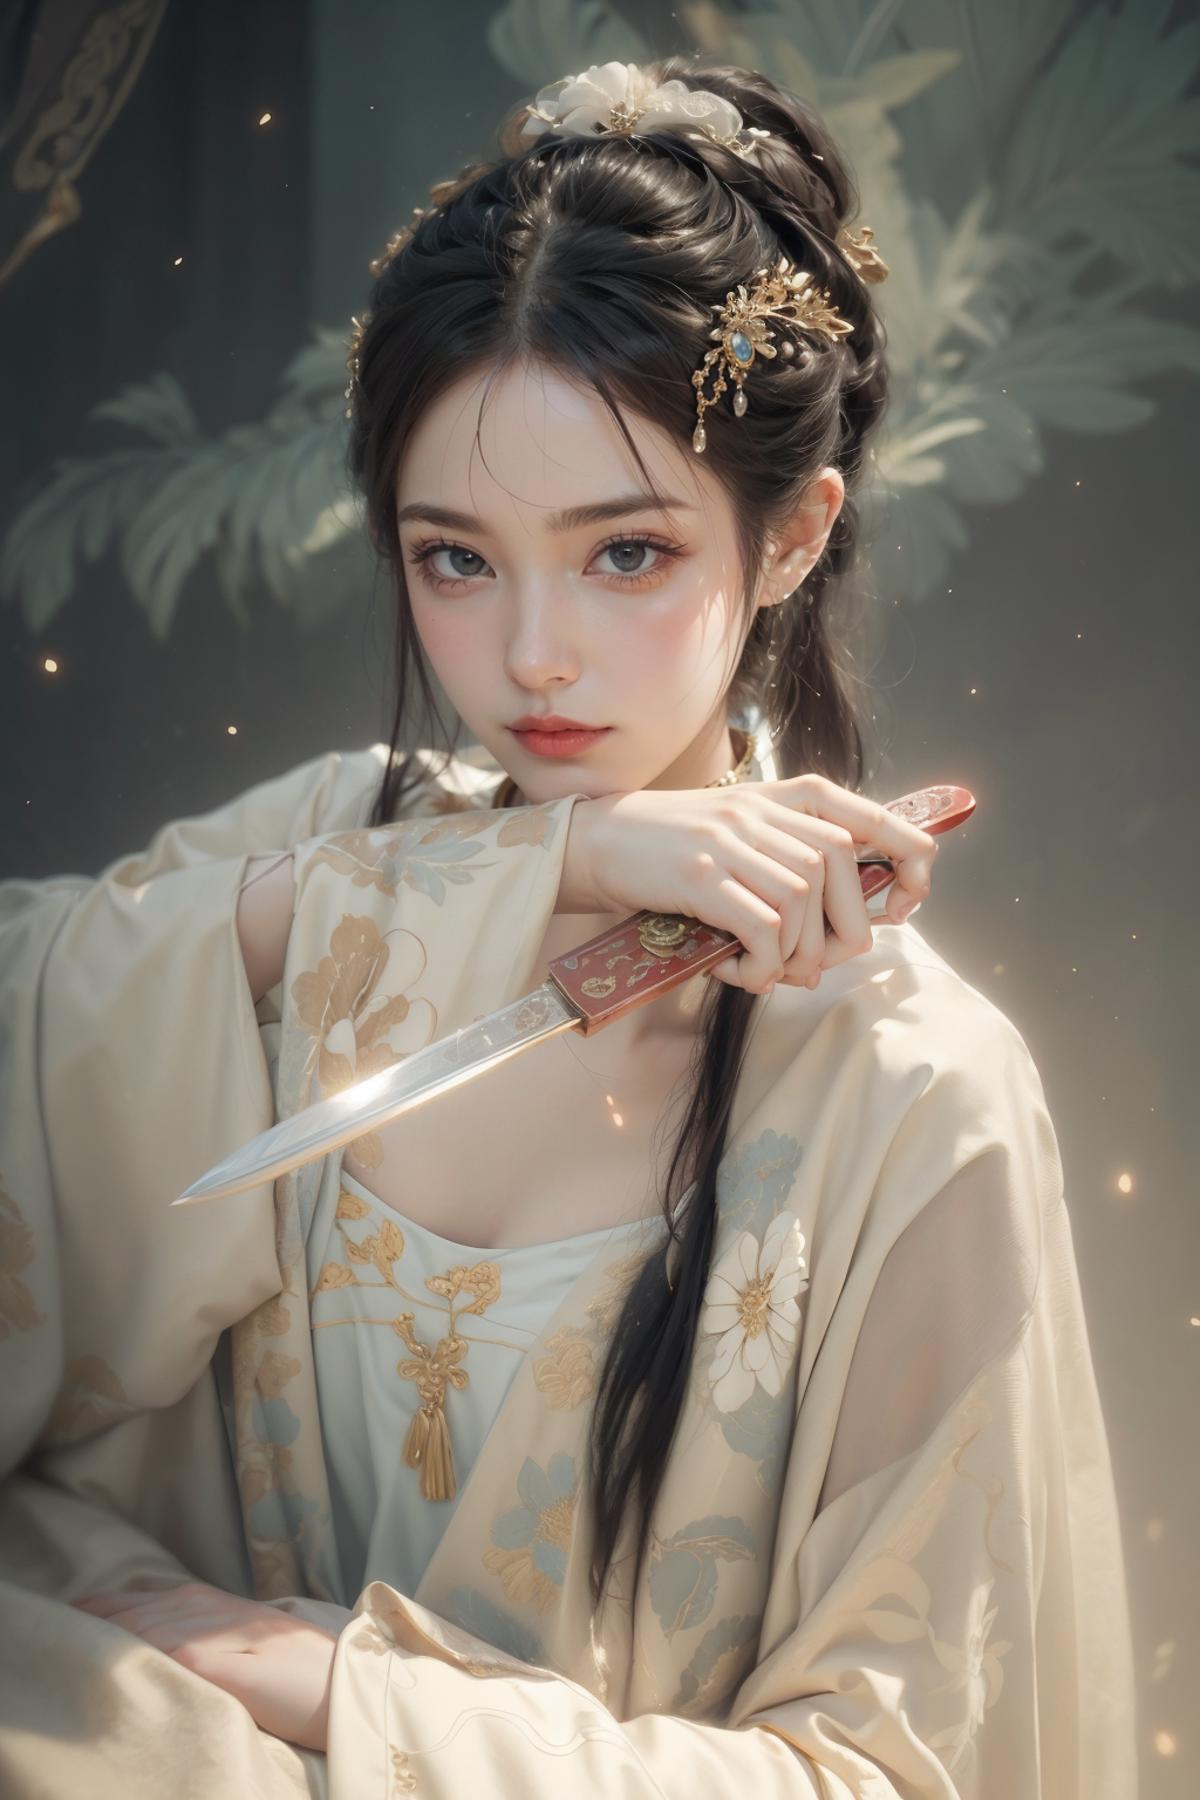 An Asian woman wearing a kimono holding a sword.